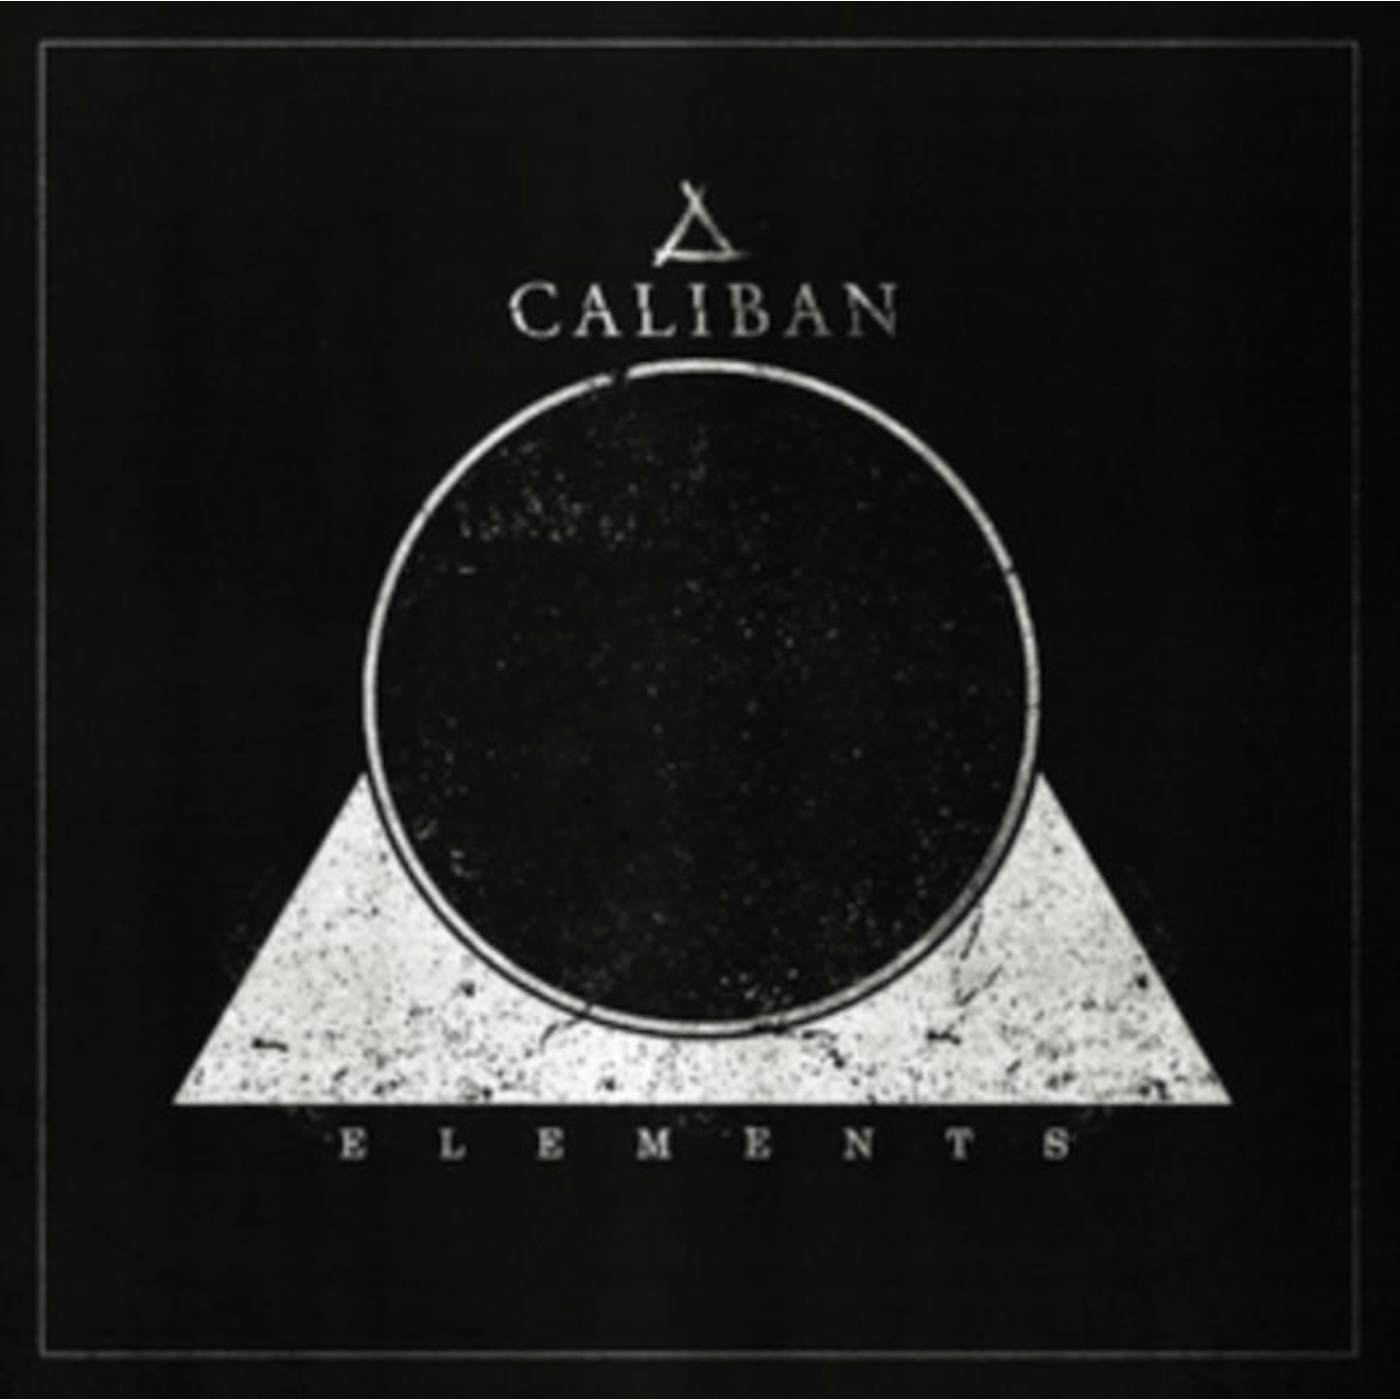  Caliban LP - Elements (Vinyl)